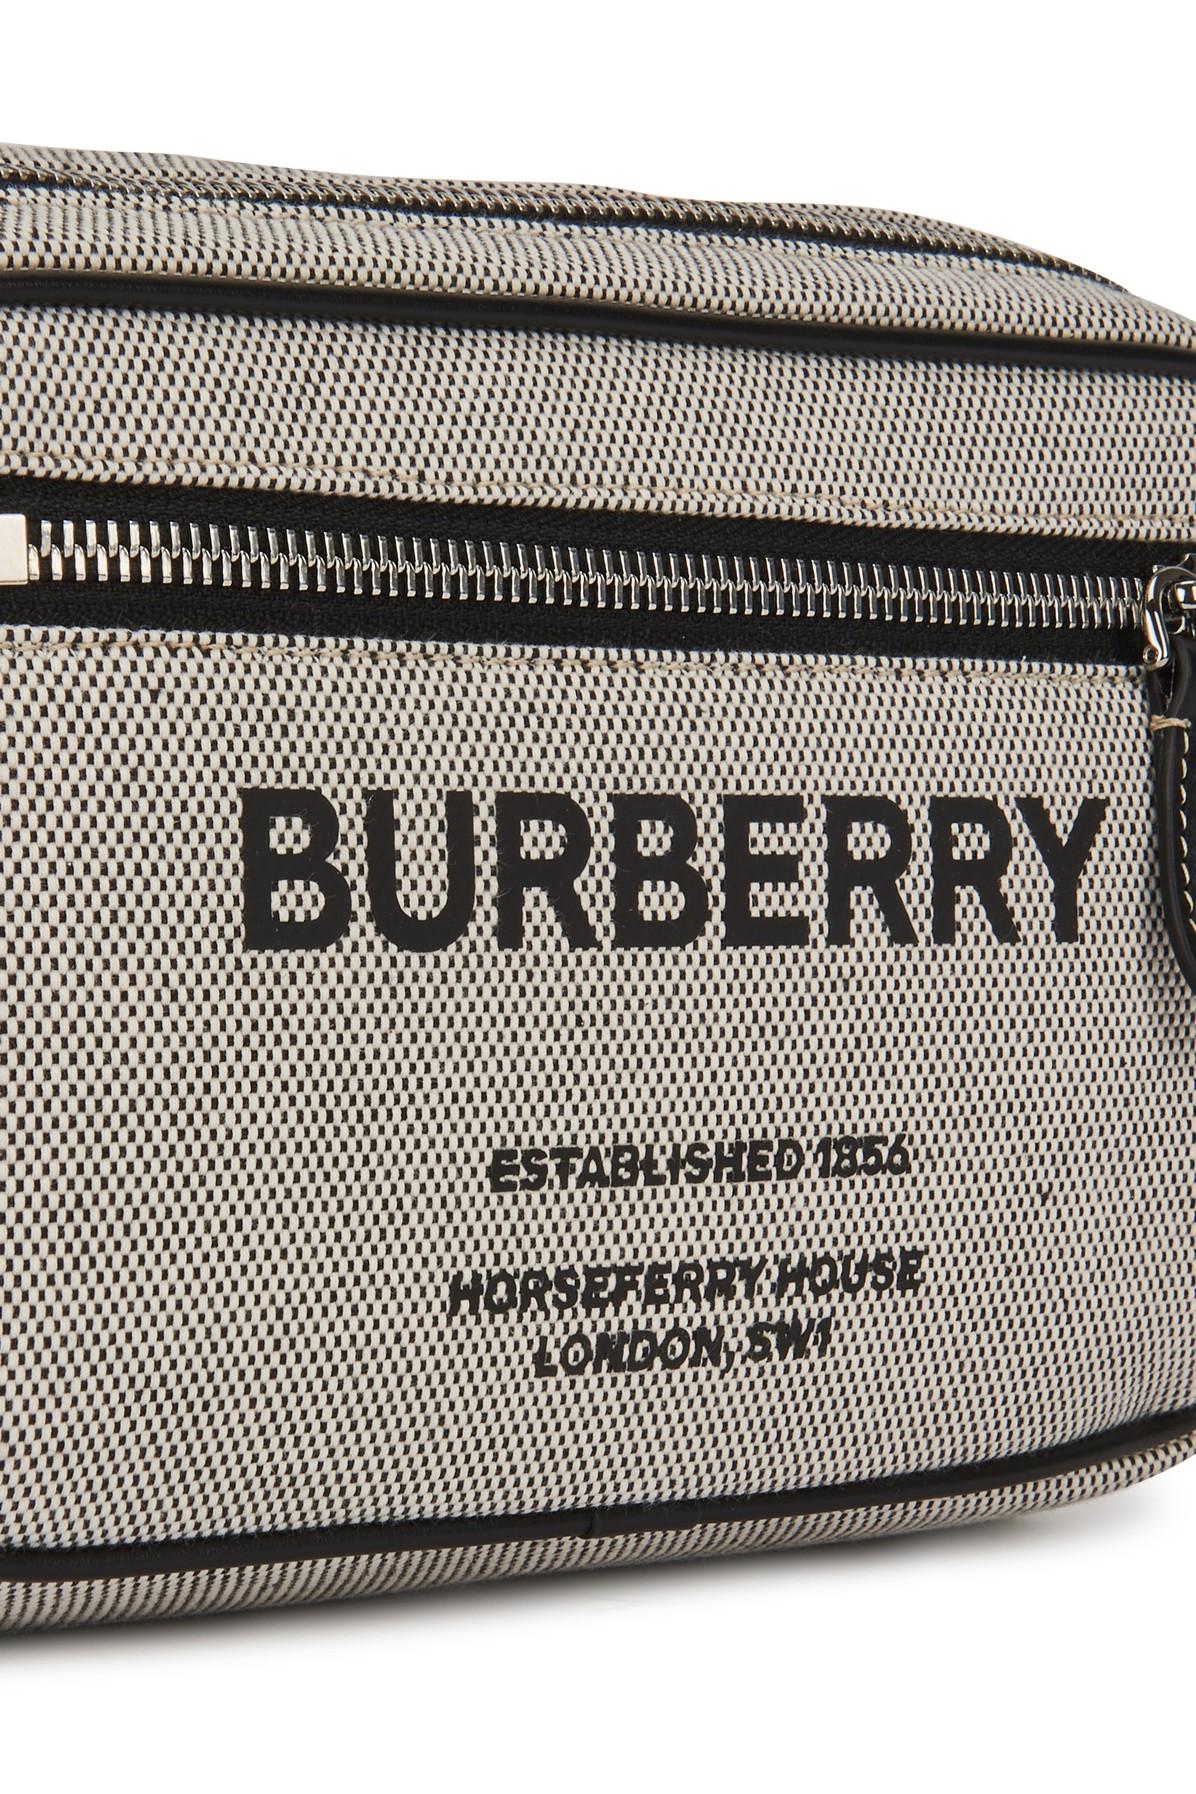 Burberry Belt Bag in Black for Men - Lyst